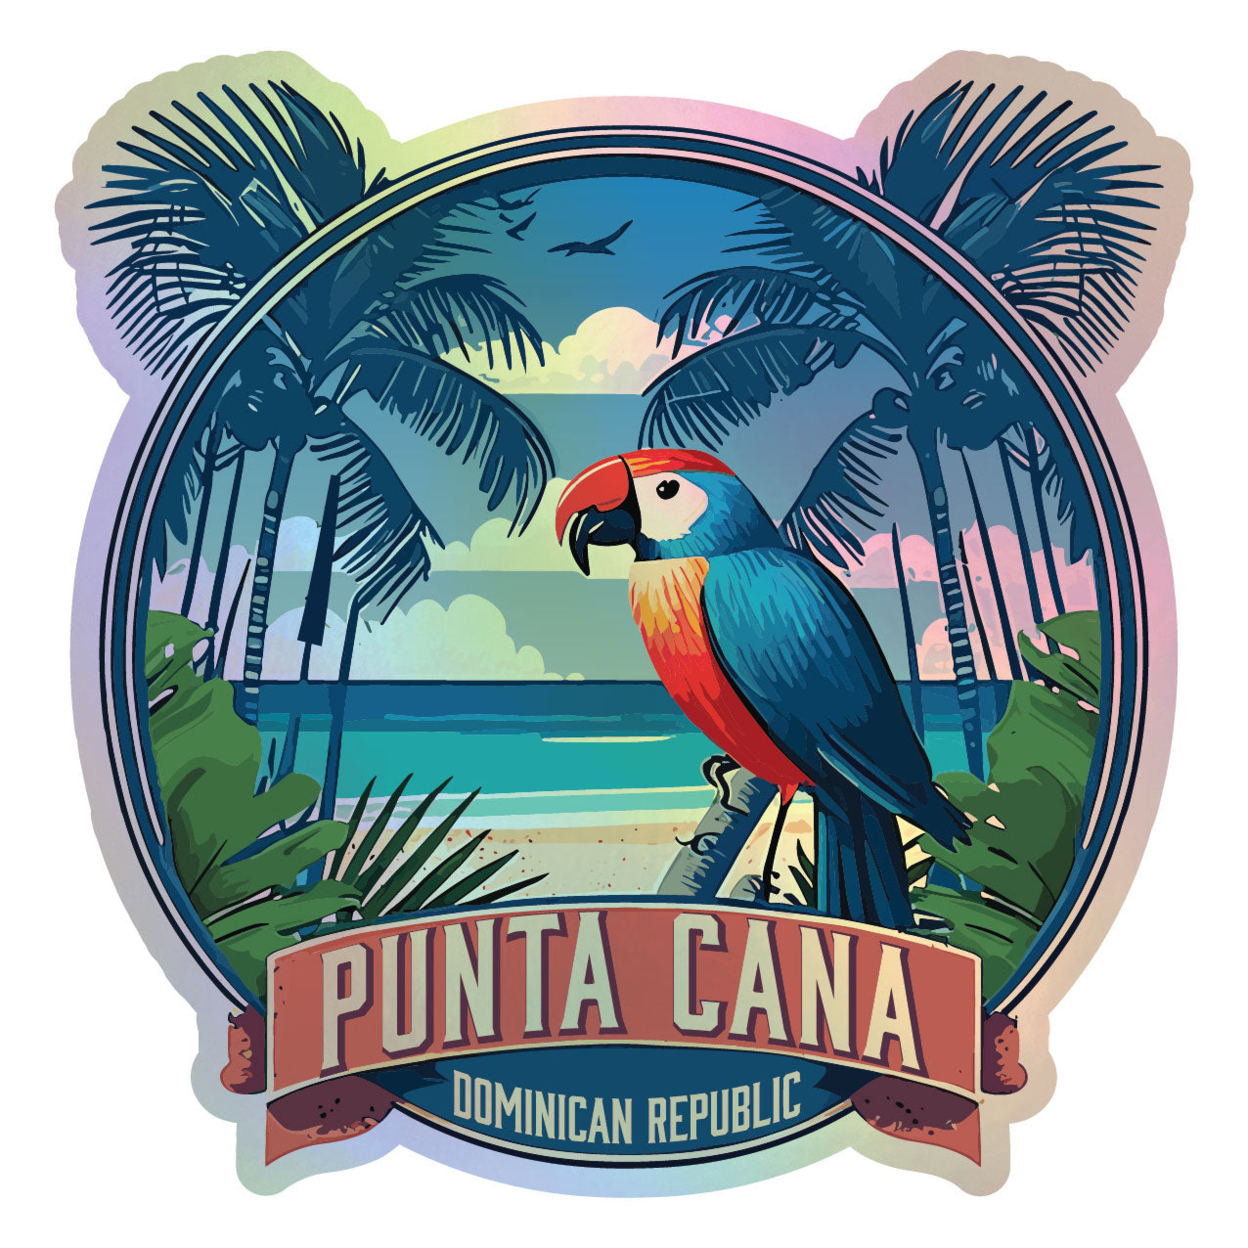 Punta Cana Dominican Republic Holographic Souvenir Vinyl Decal Sticker Parrot Design - 14 Inch